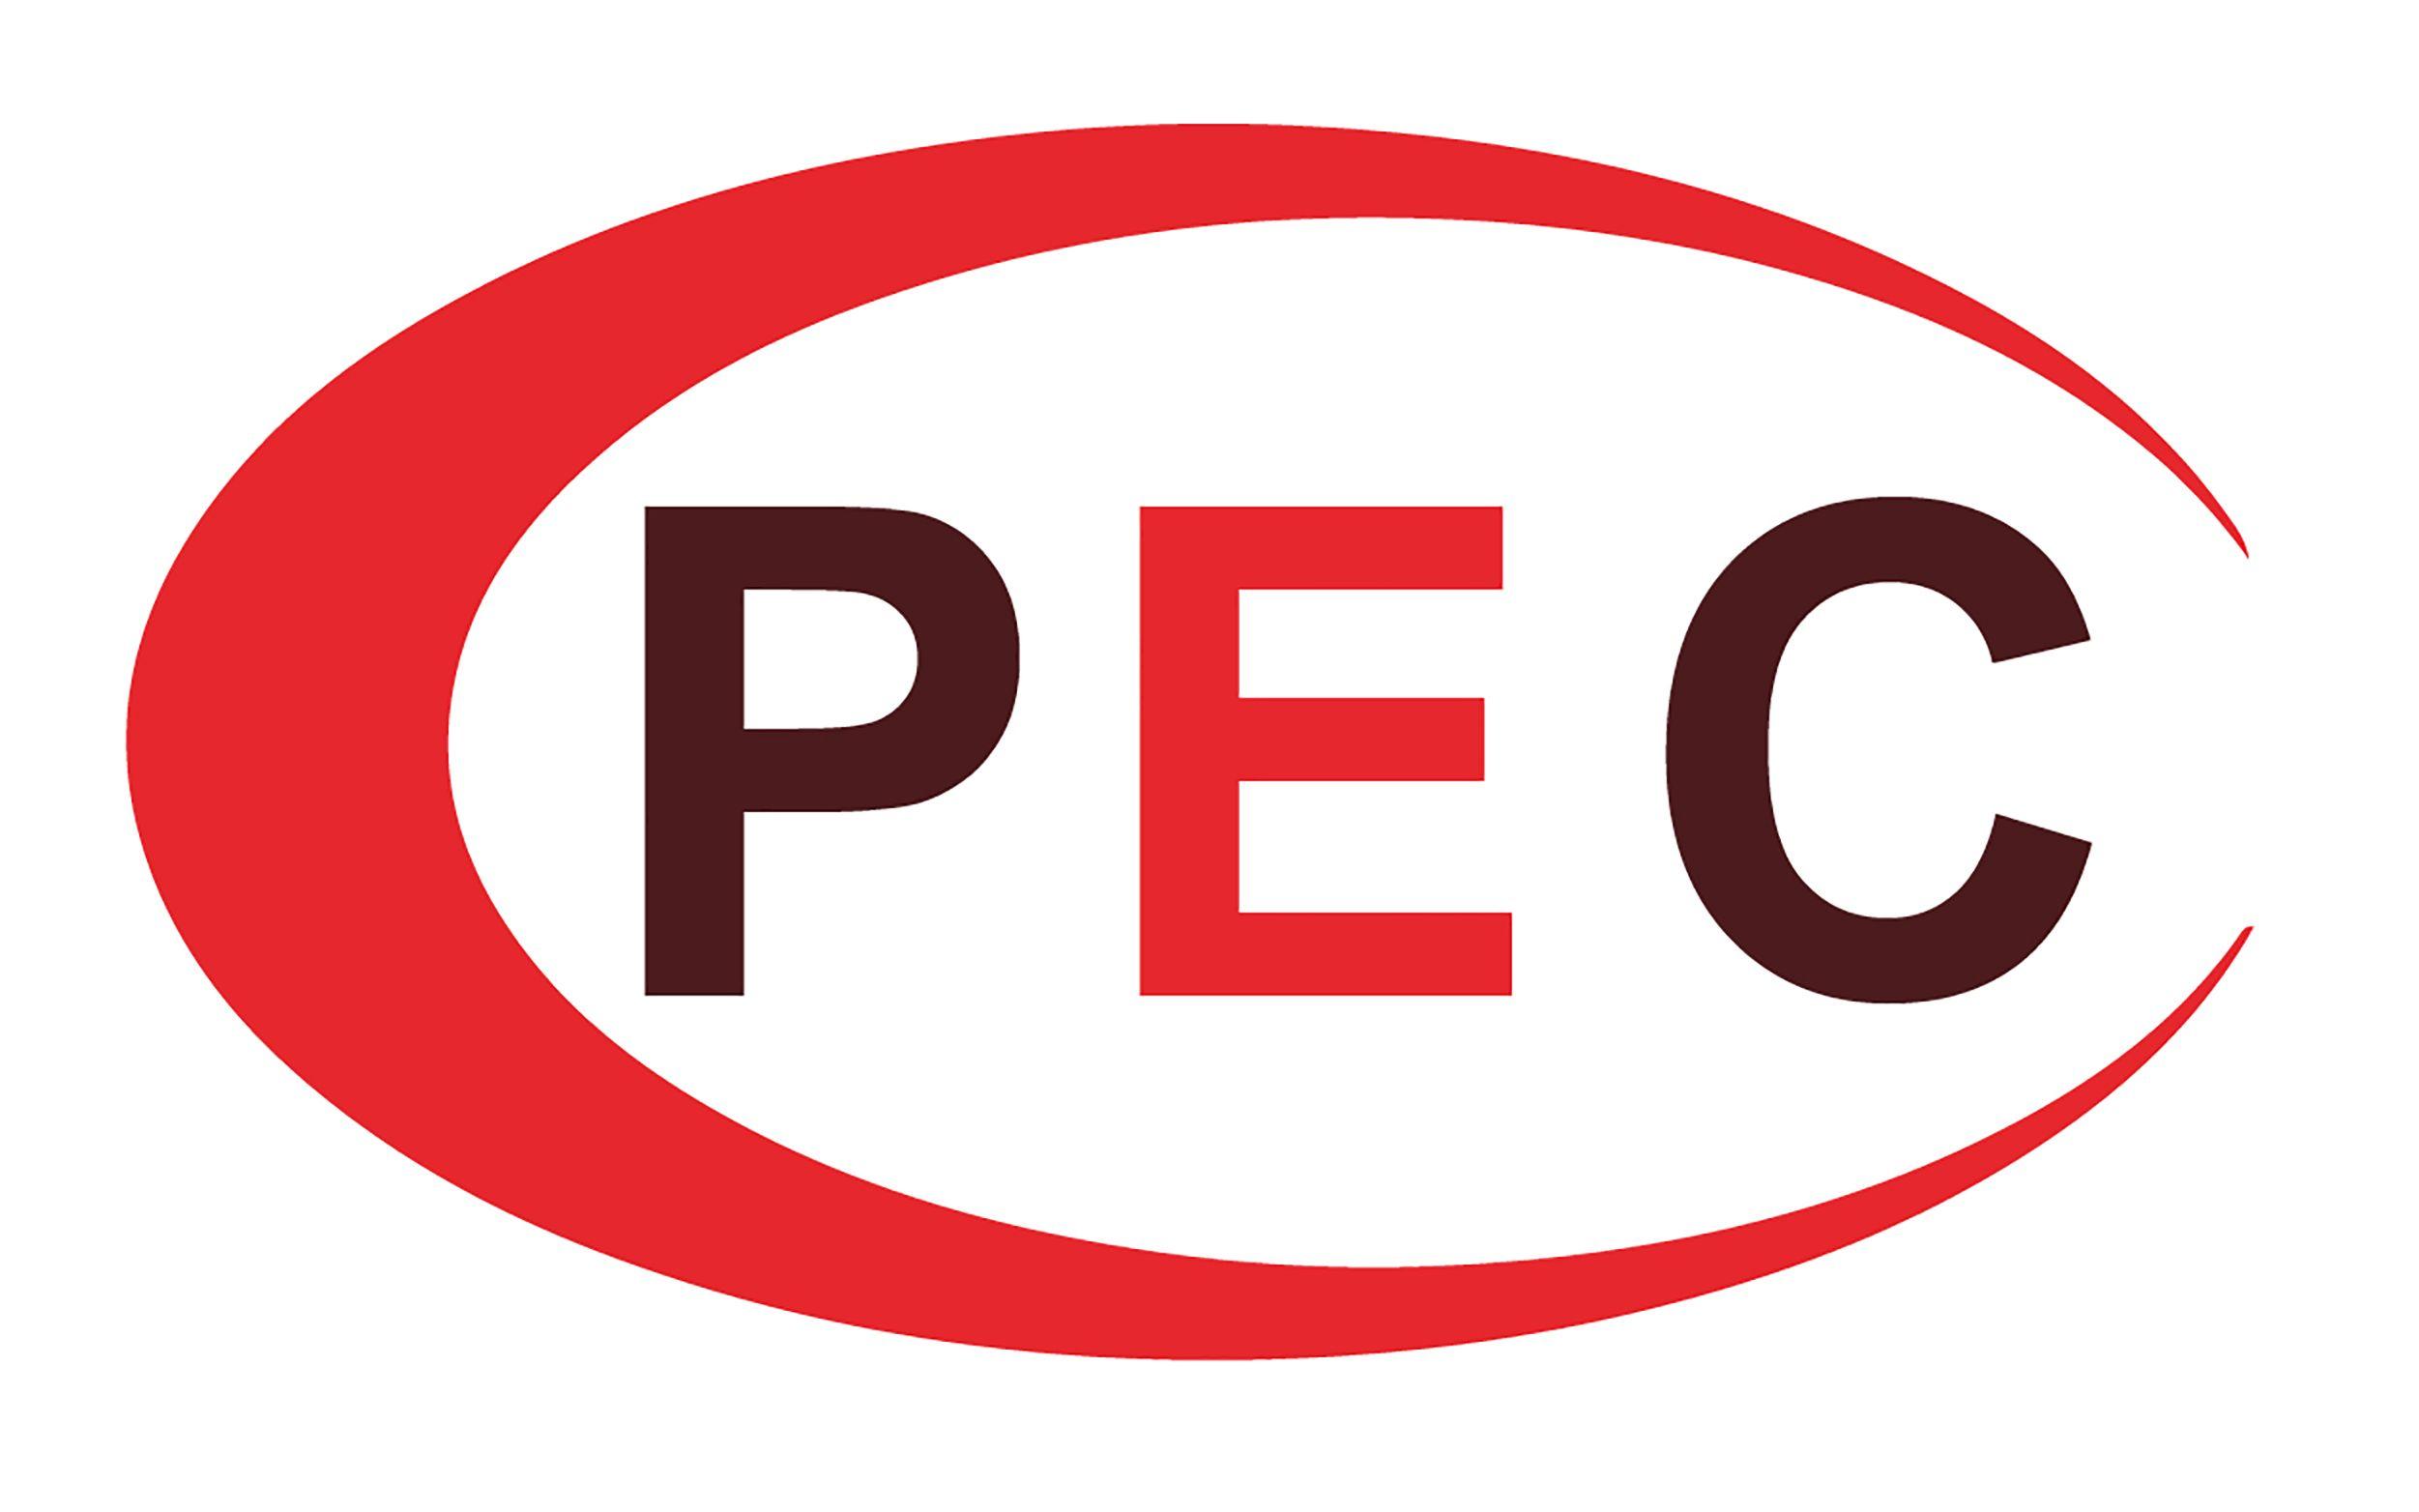 PEC Logo - logo pec | Global Student Mobility Ltd.